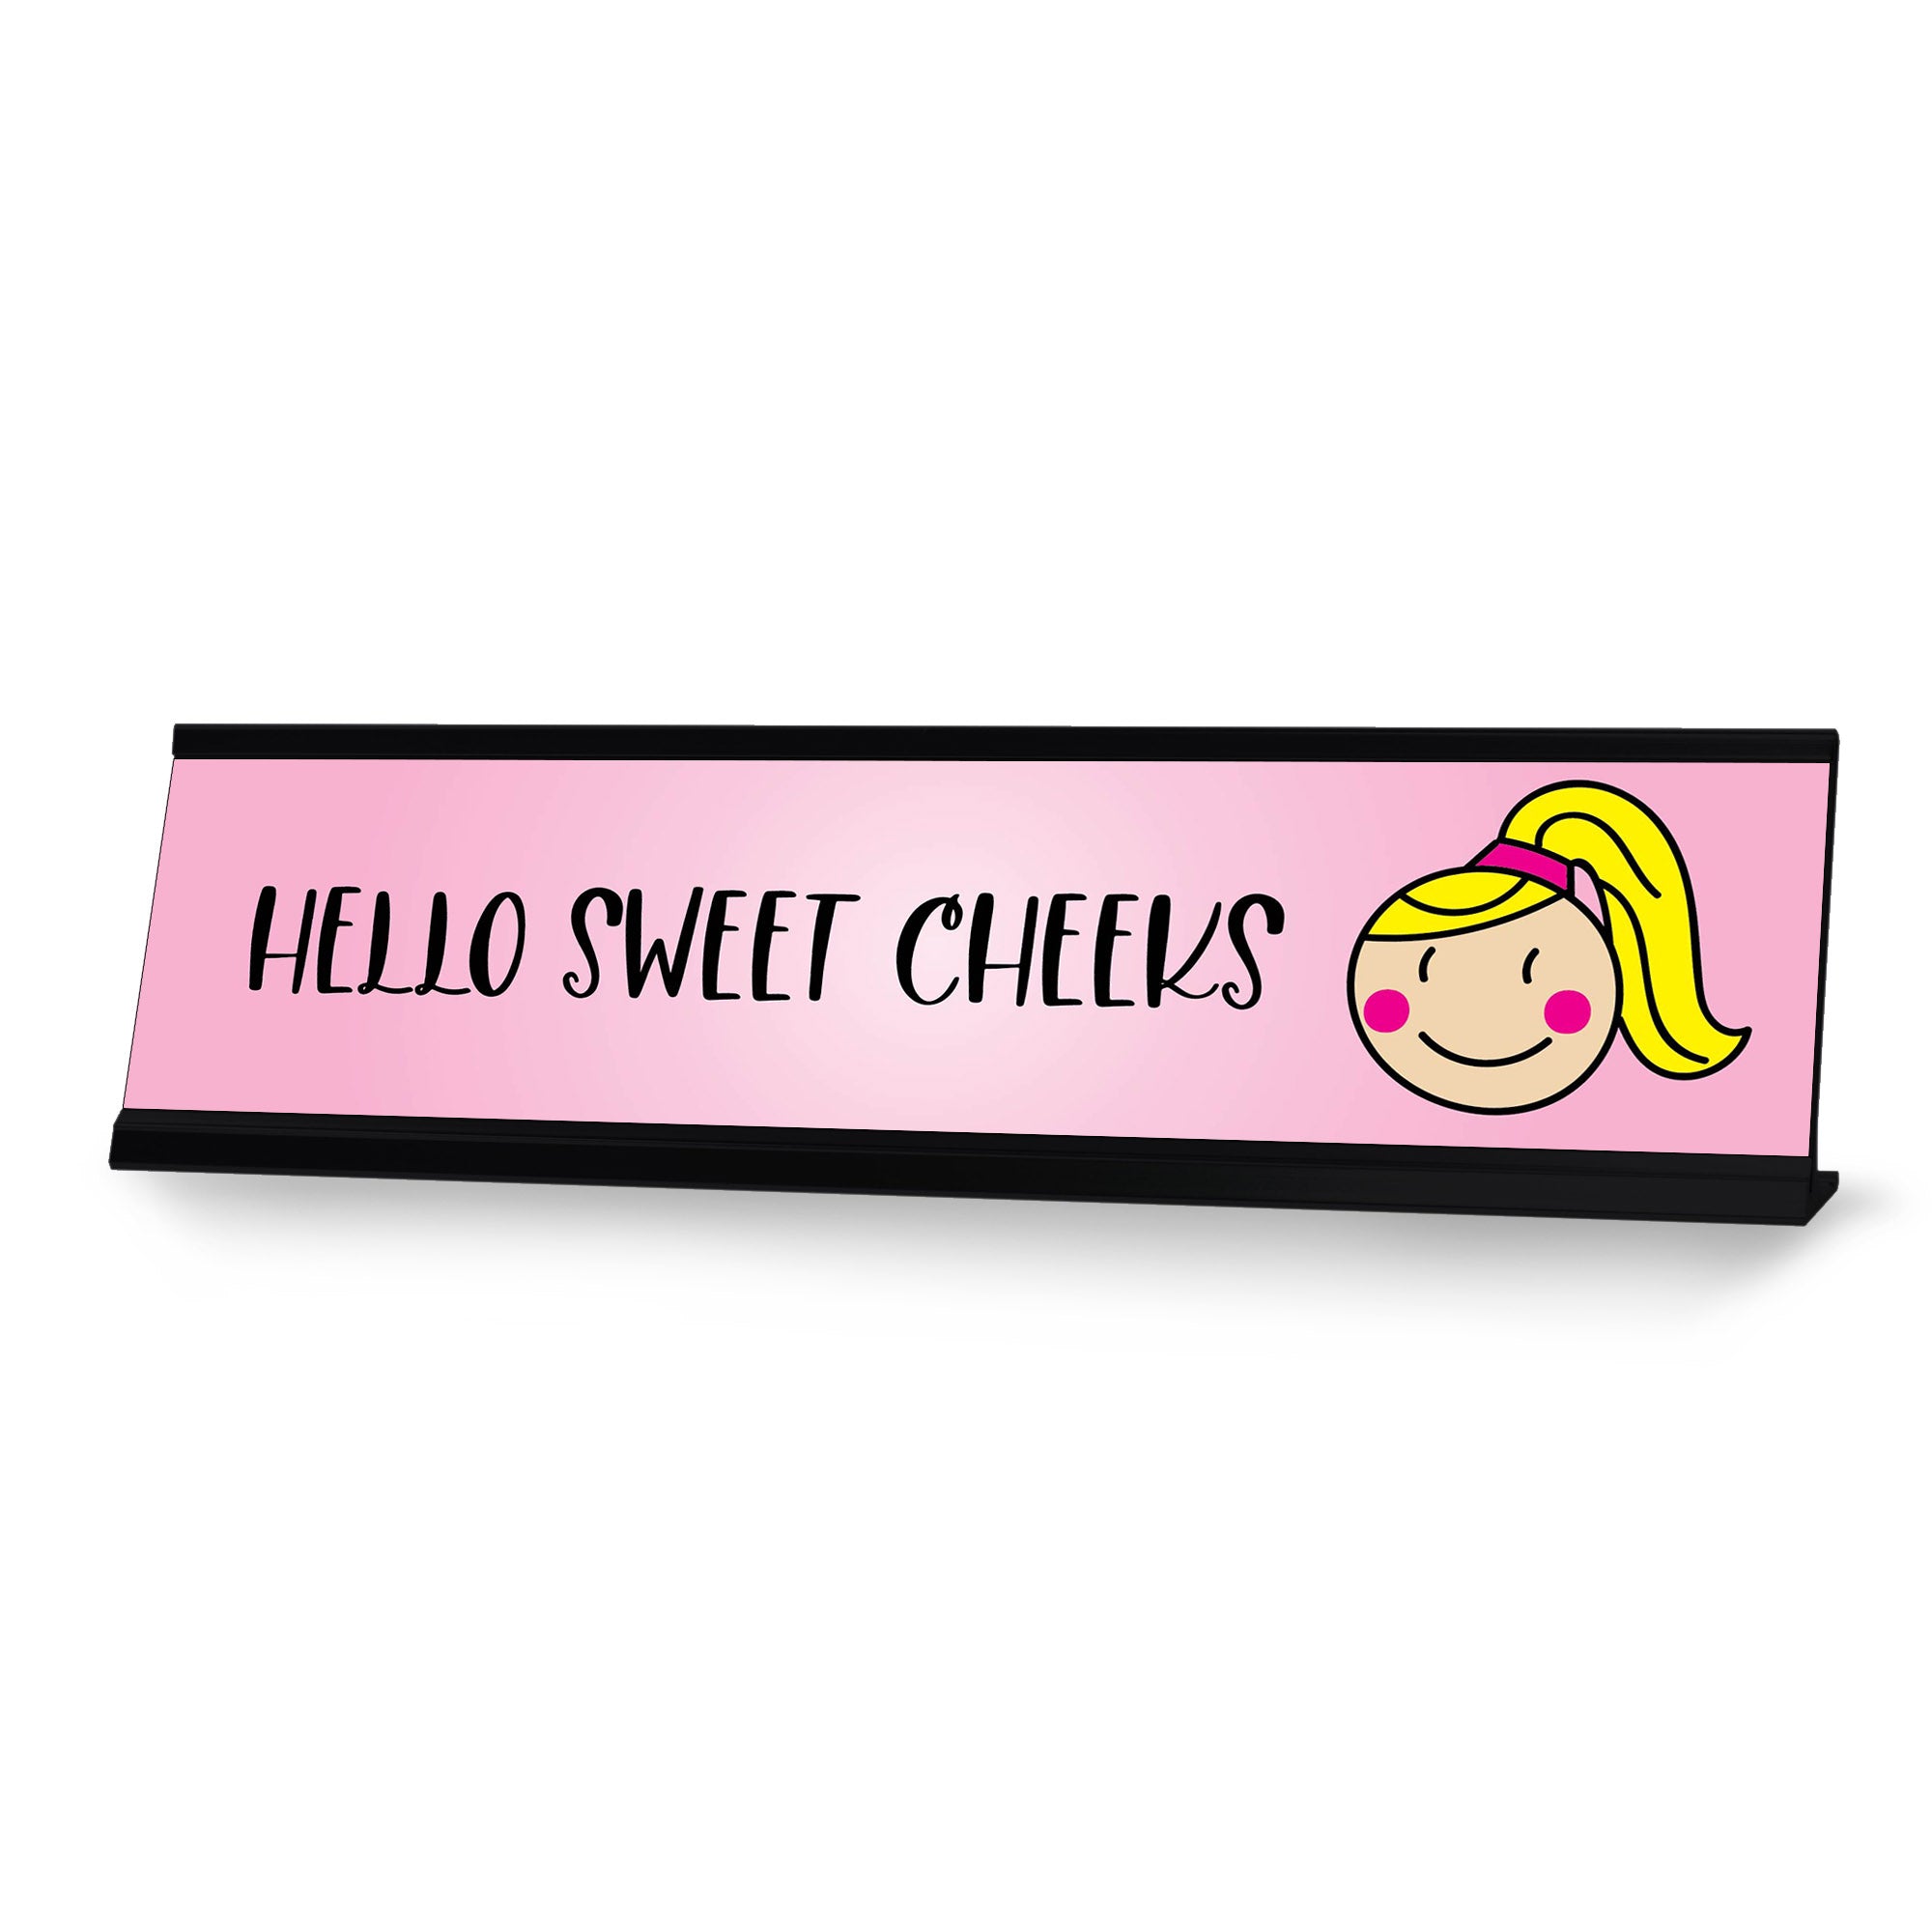 Hello Sweet Cheeks, Stick People Desk Sign, Novelty Nameplate (2 x 8")